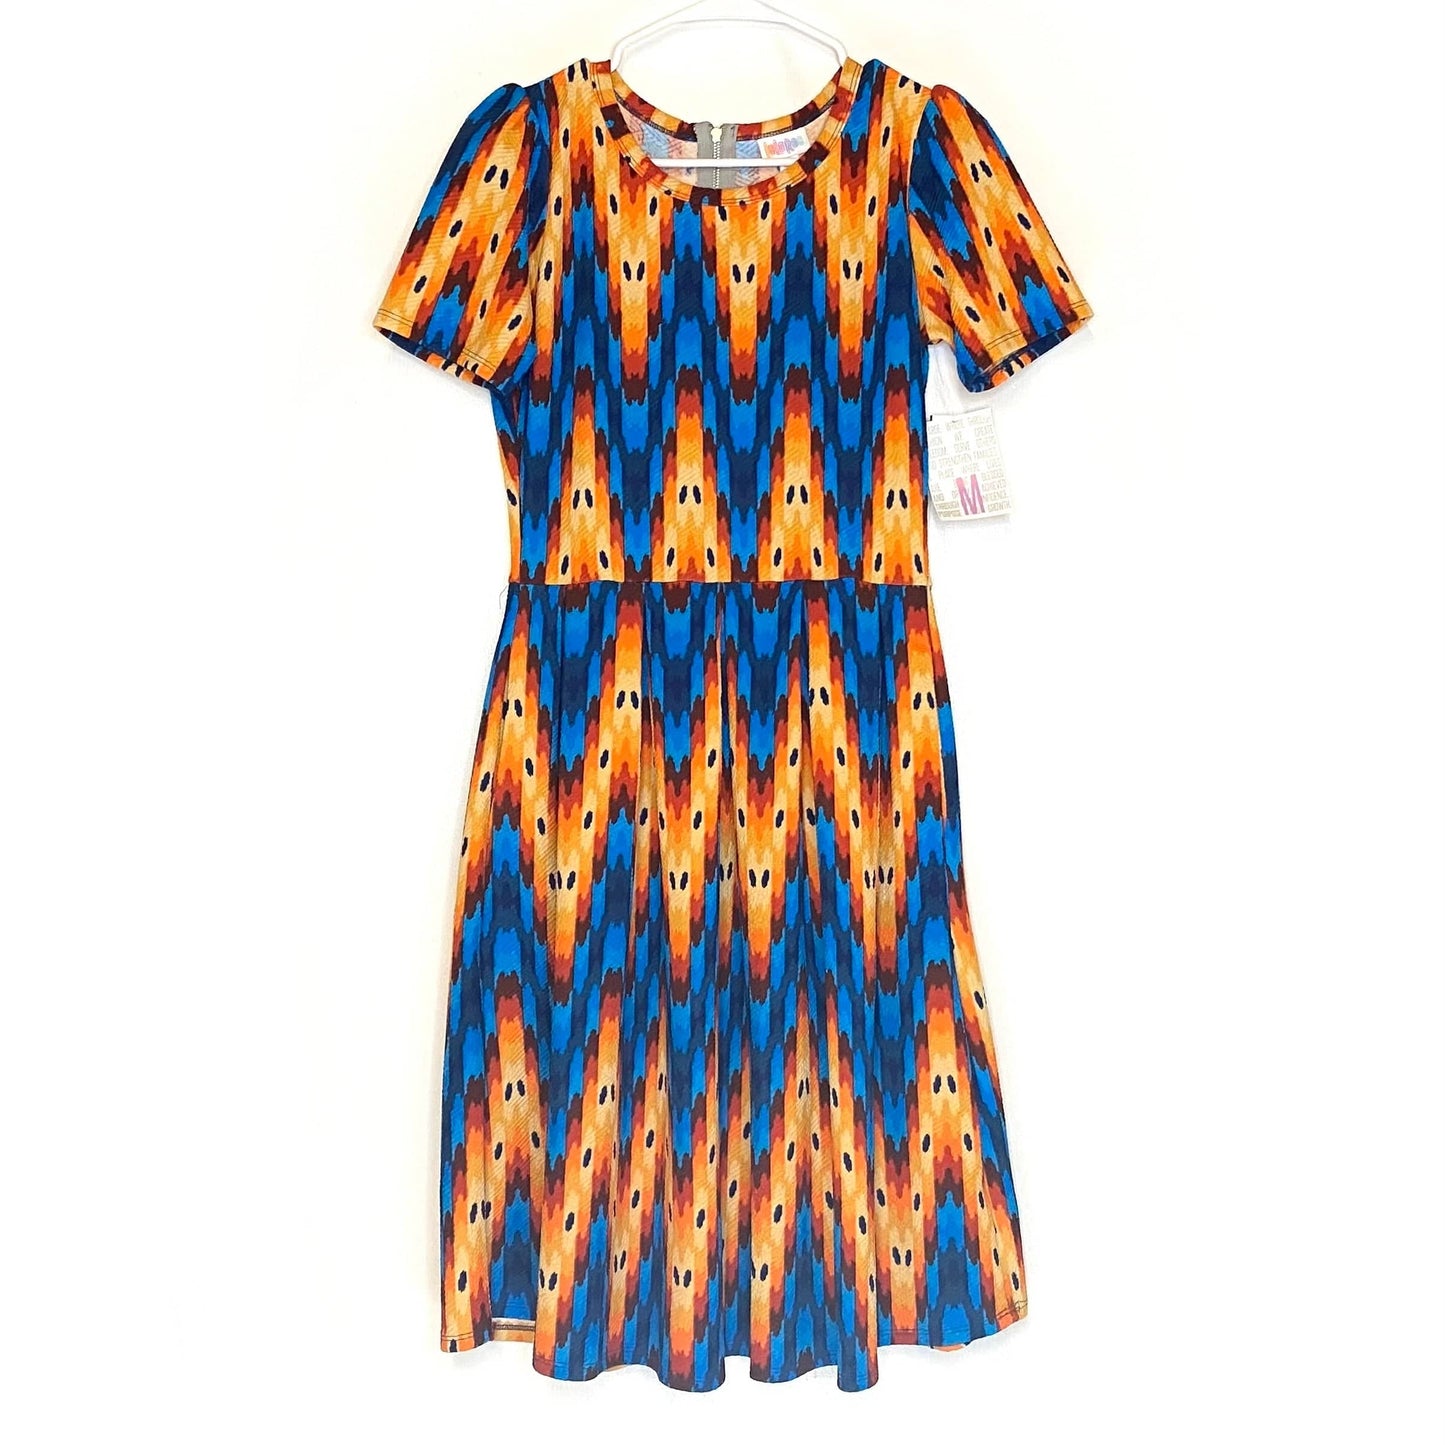 LuLaRoe Womens M Amelia Orange/Blue Abstract Wave Pattern Dress S/s NWT